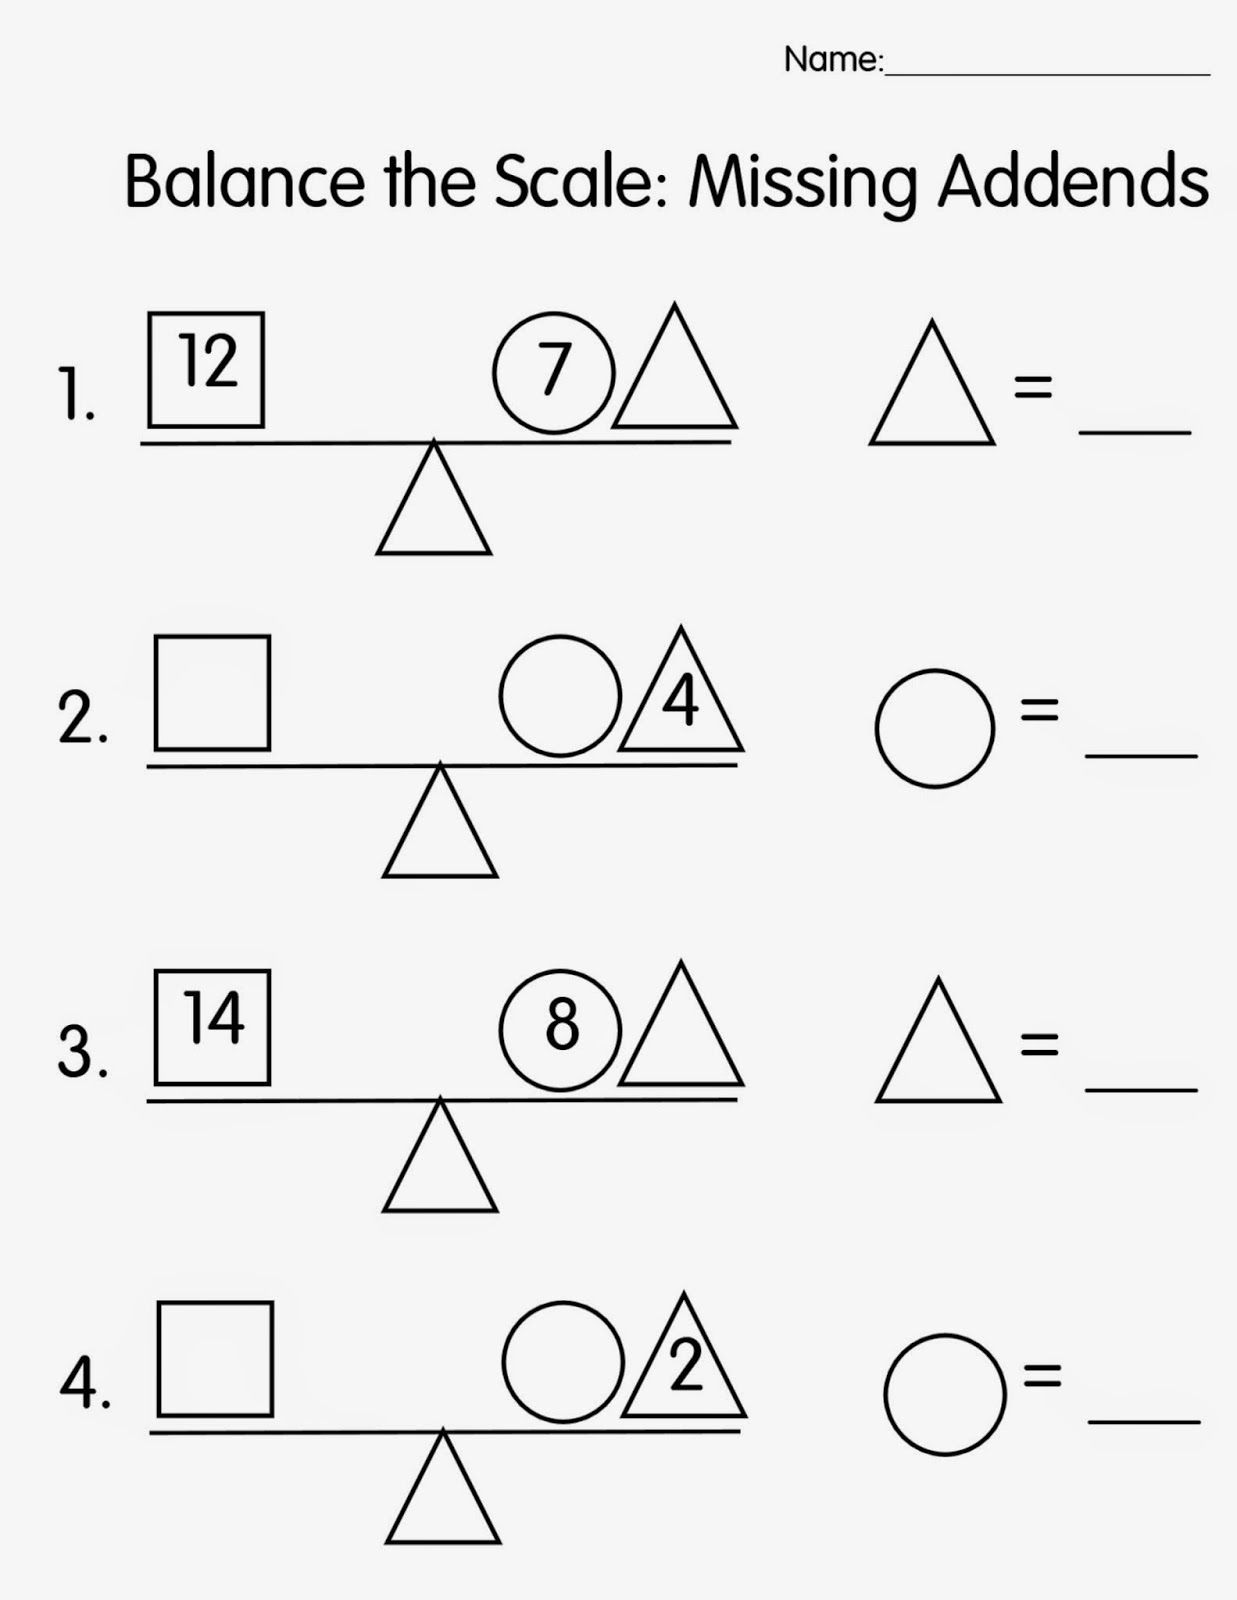 Free Math Worksheets Third Grade 3 Addition Add 2 Digit Plus 1 Digit Missing Addend